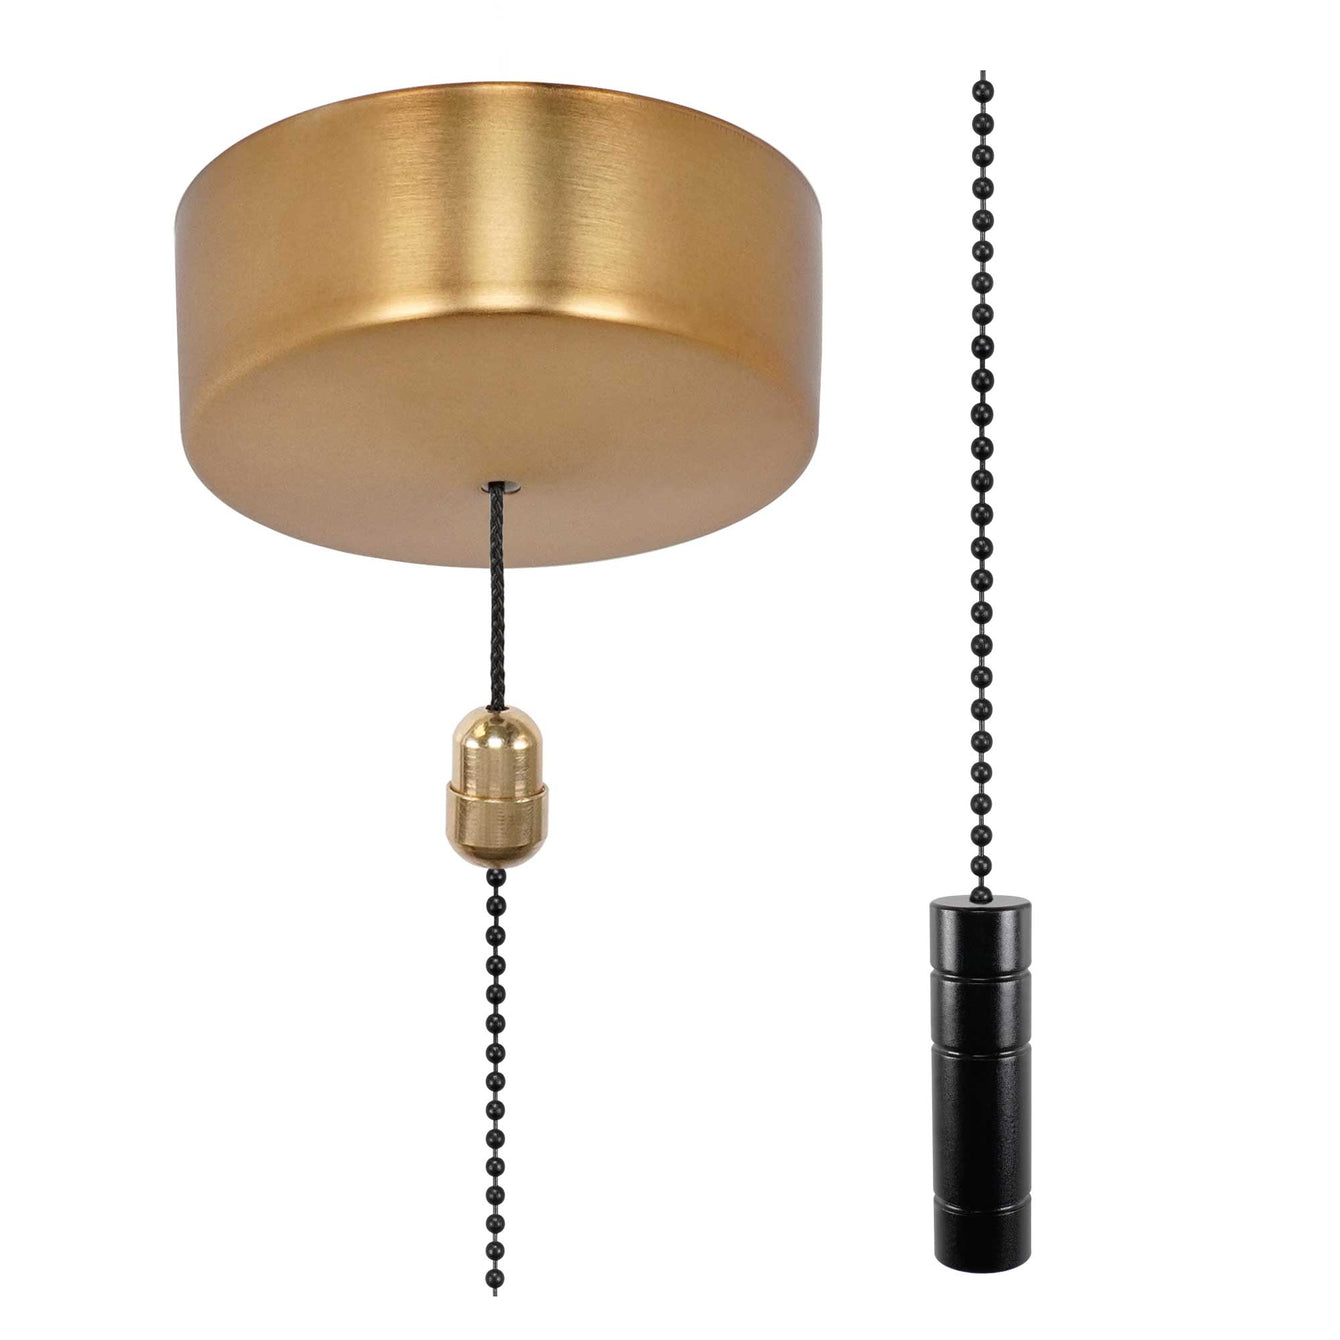 ElekTek Premium Brushed Brass Bathroom Light Pull Cord Switch Kit with Pull Chain Handle 